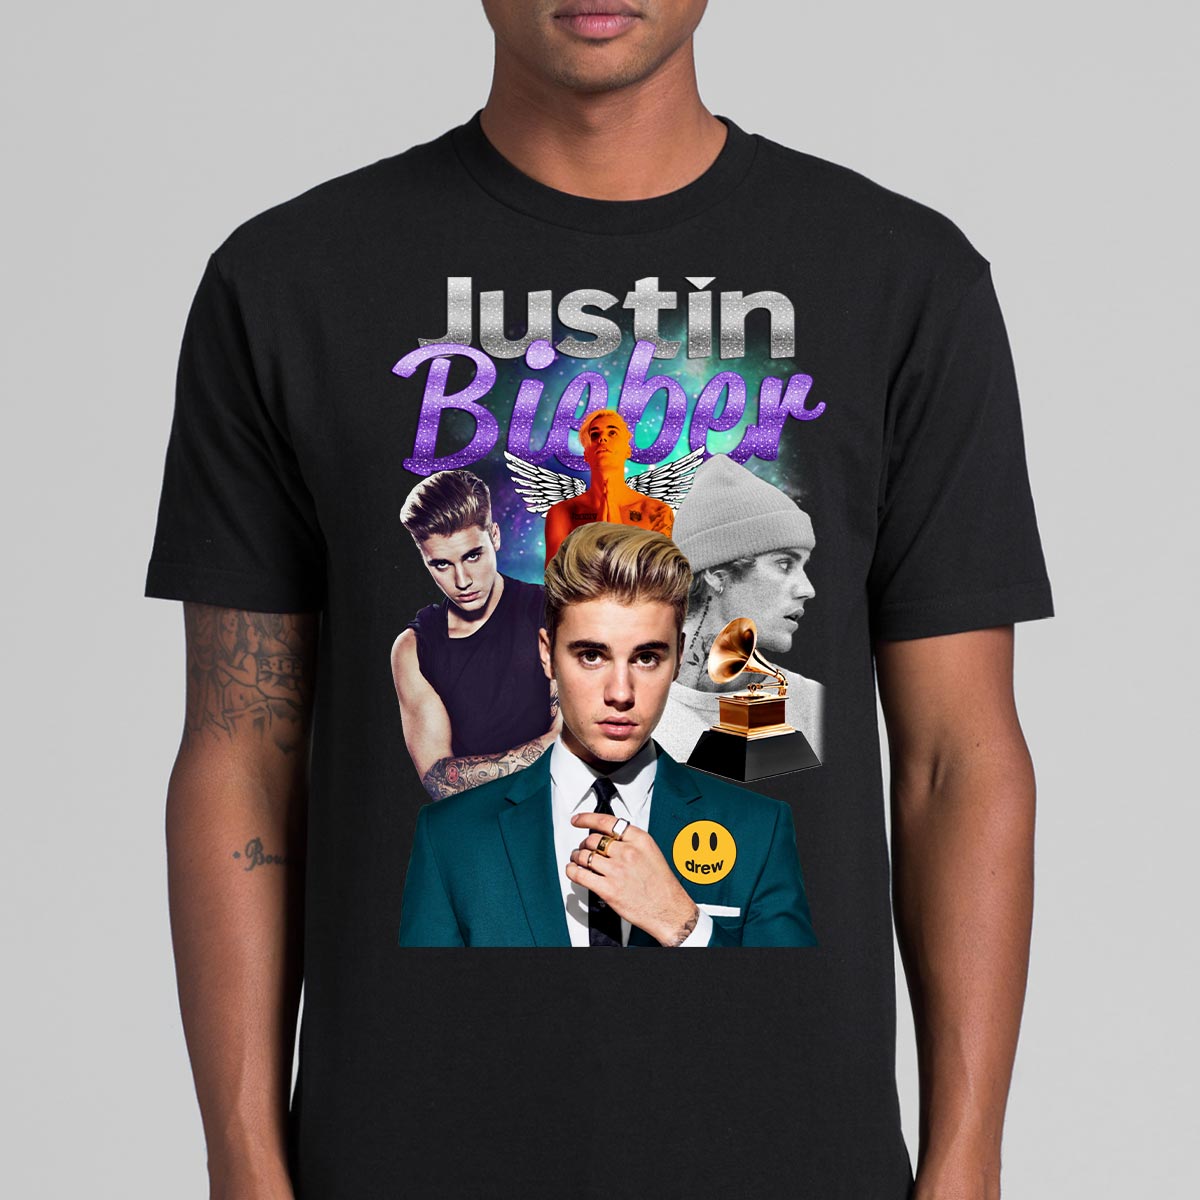 Justin Bieber 02  T-Shirt Family Fan Tee Music Pop